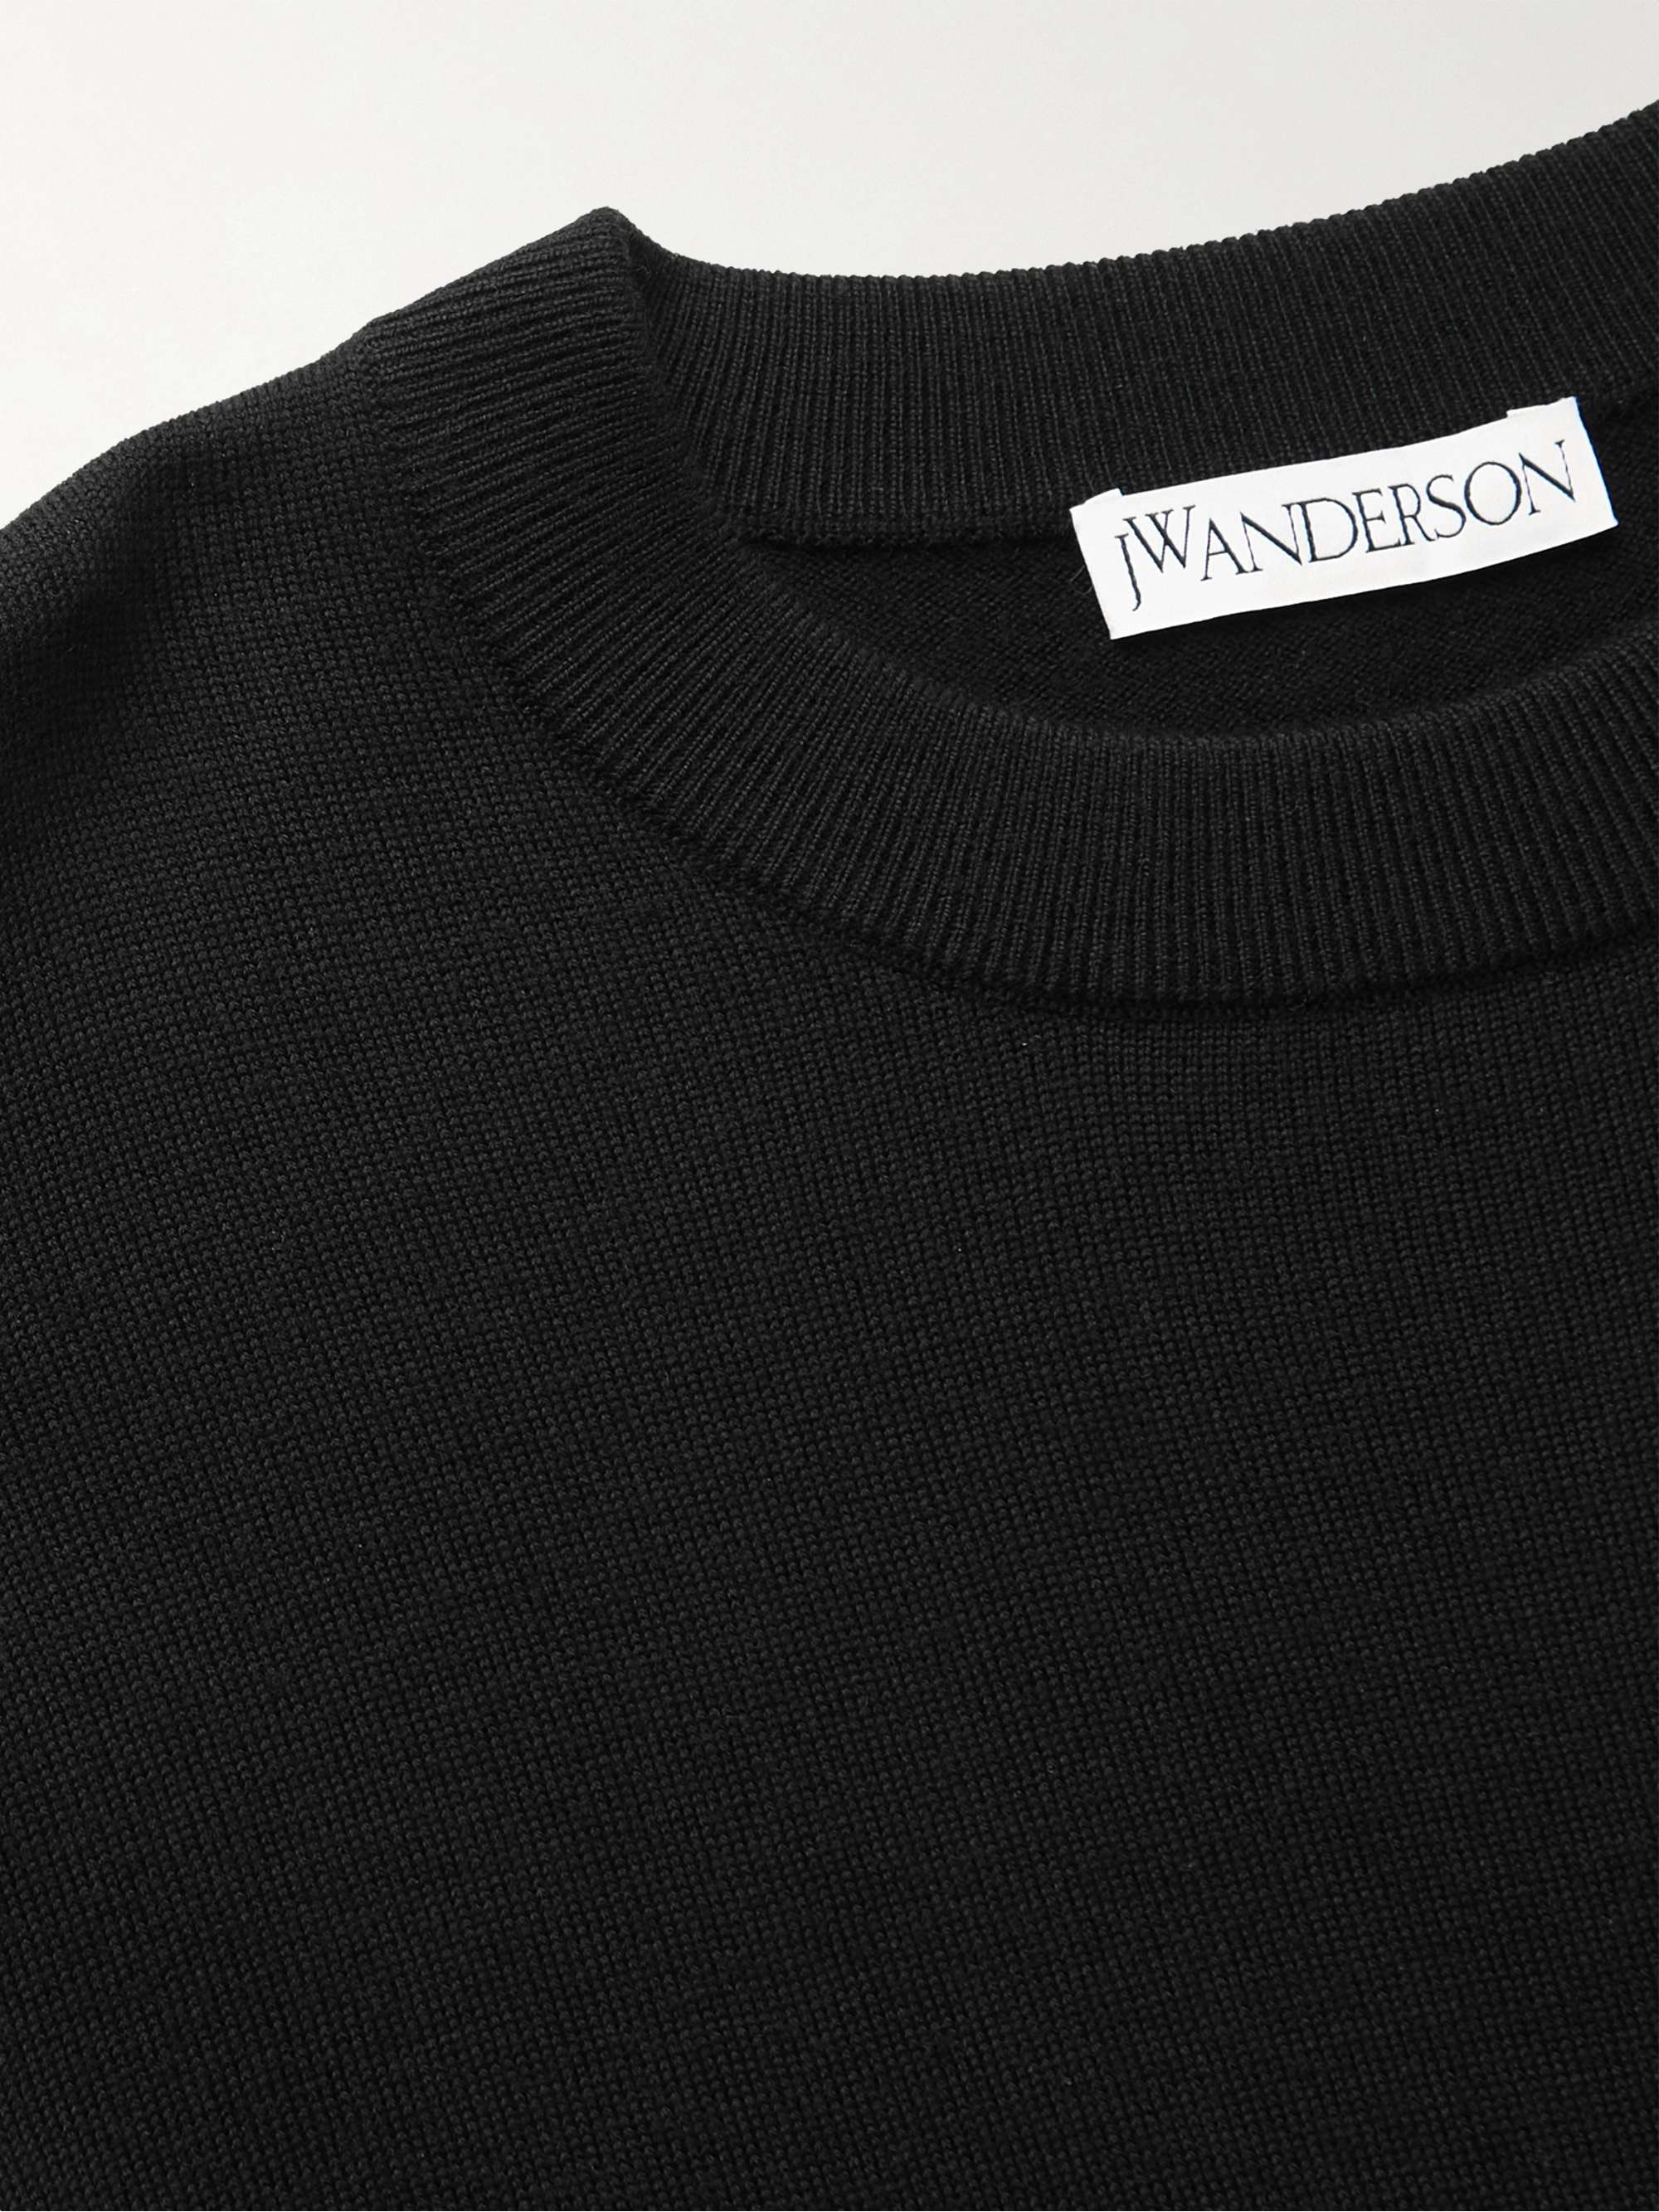 JW ANDERSON Logo-Jacquard Merino Wool Sweater